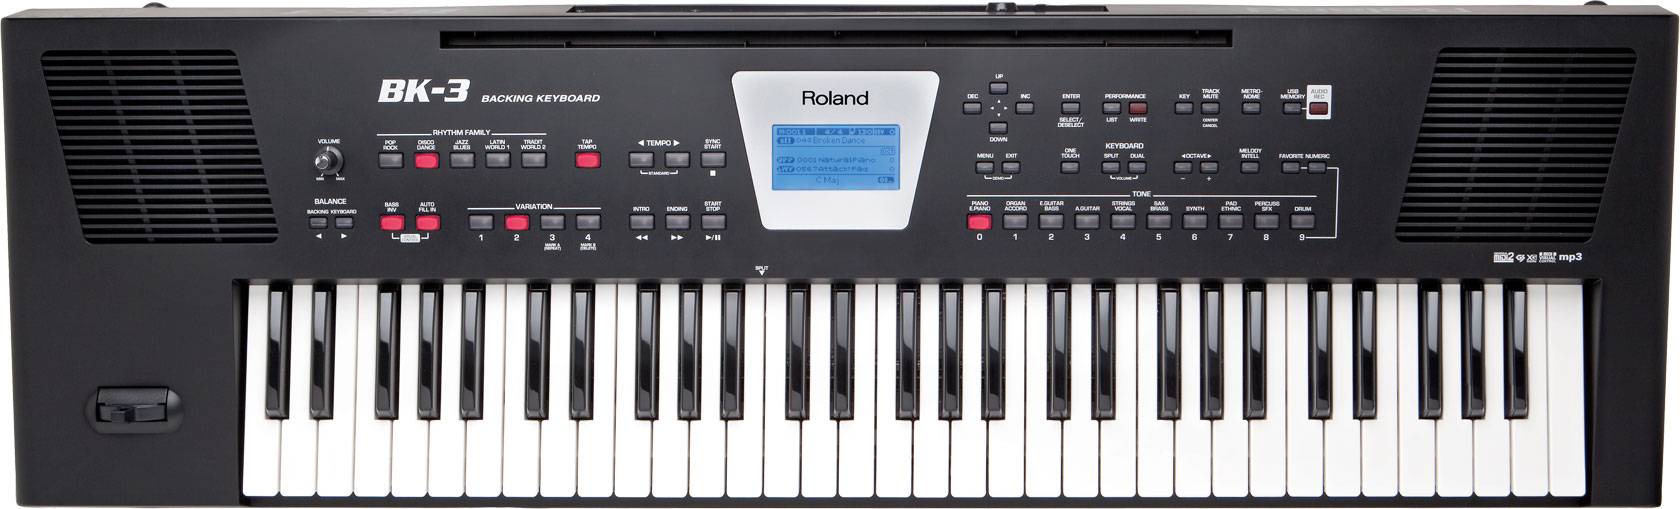 Roland BK-3 Black Backing Keyboard